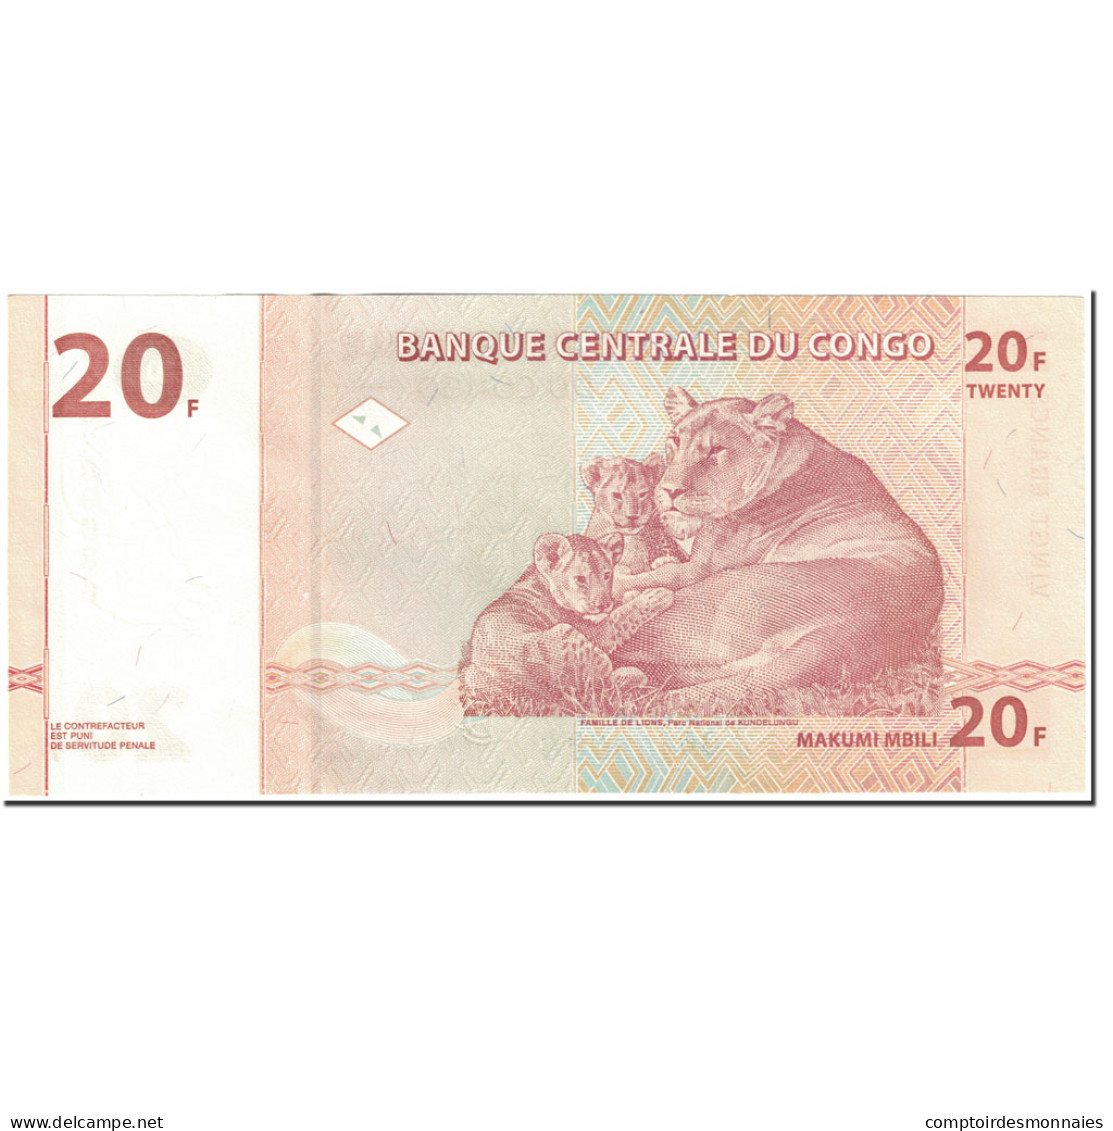 Billet, Congo Democratic Republic, 20 Francs, 1997, 1997-11-01, KM:88a, NEUF - Republic Of Congo (Congo-Brazzaville)